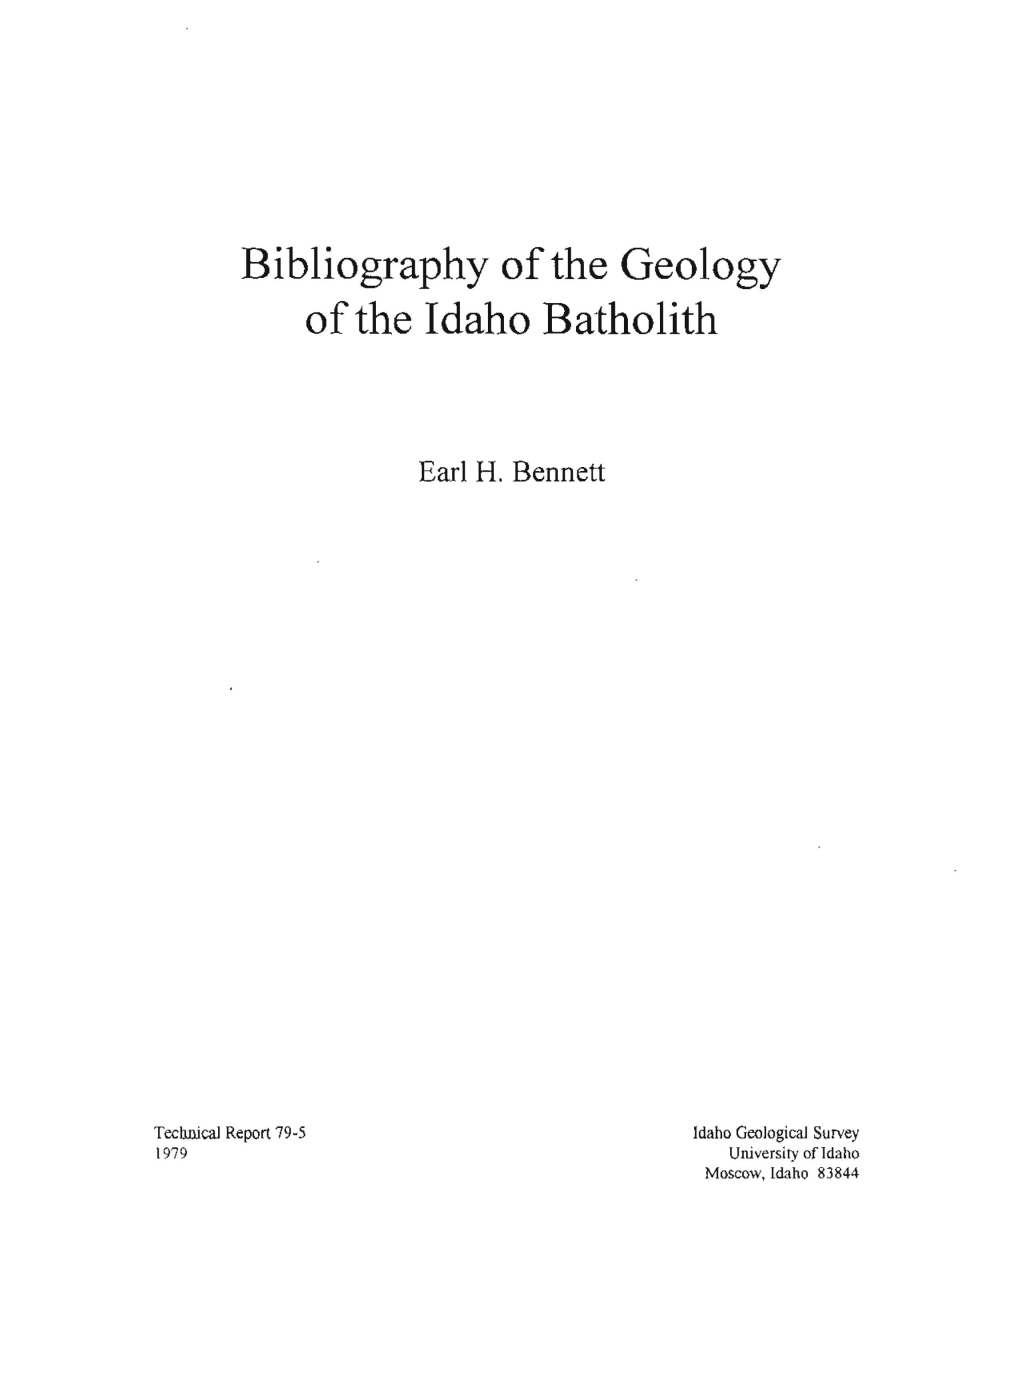 Bibliography of the Geology of the Idaho Batholith